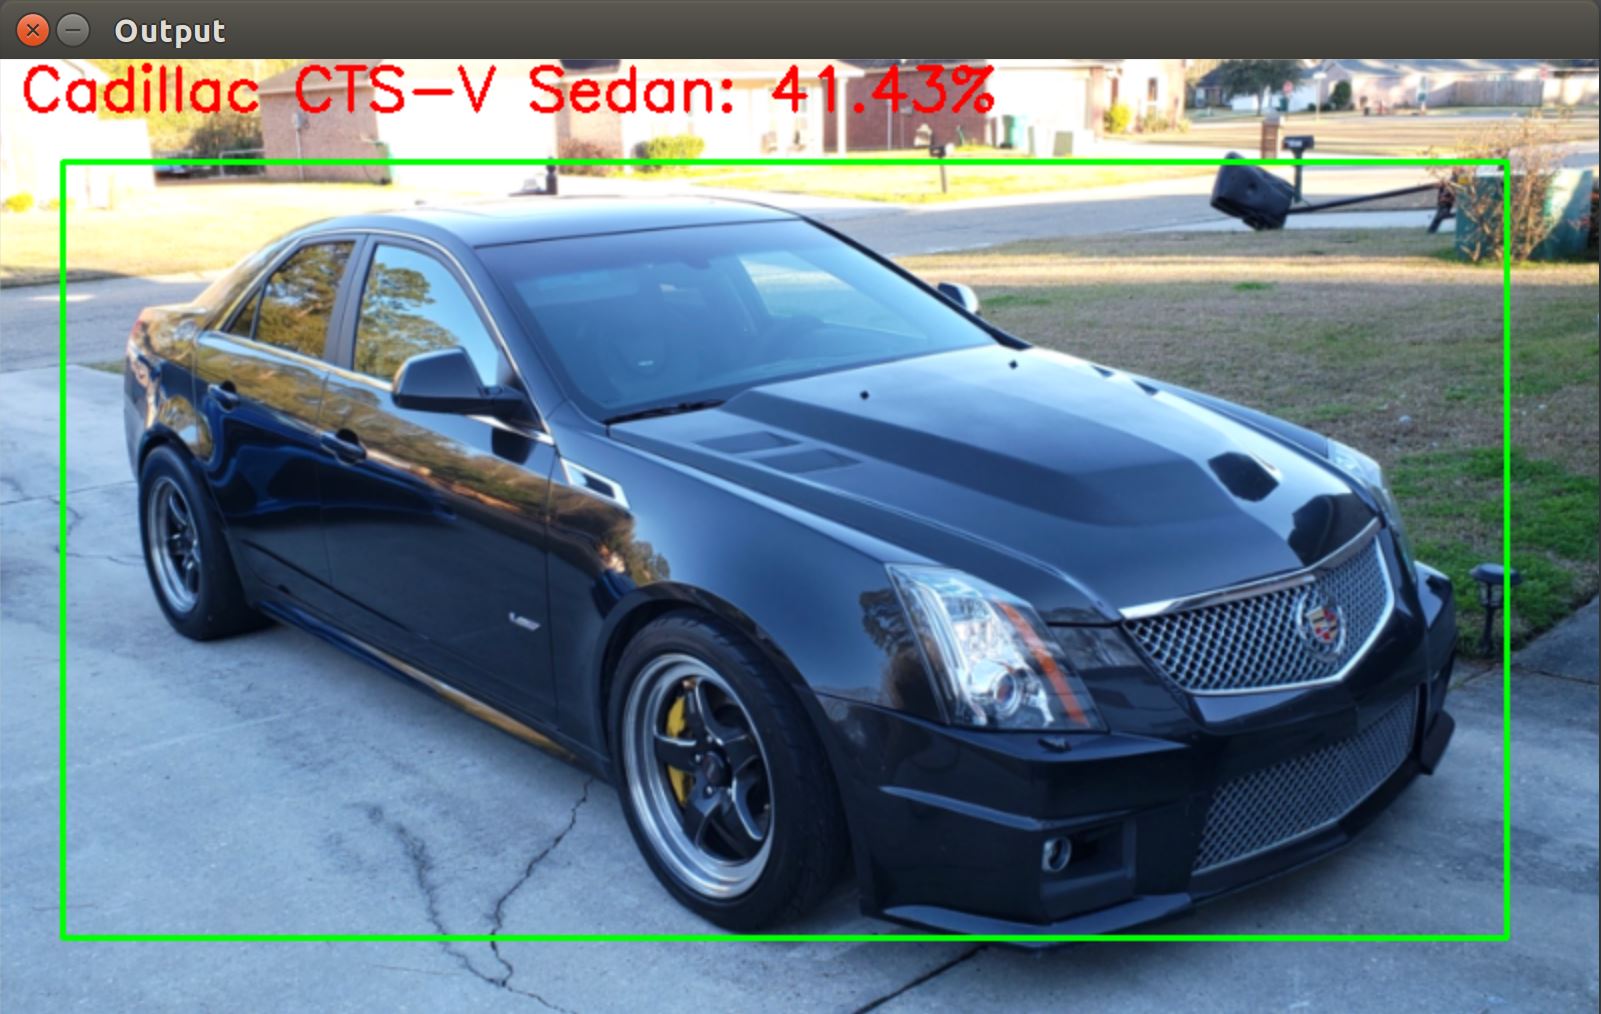 Cadillac CTS-V Sedan